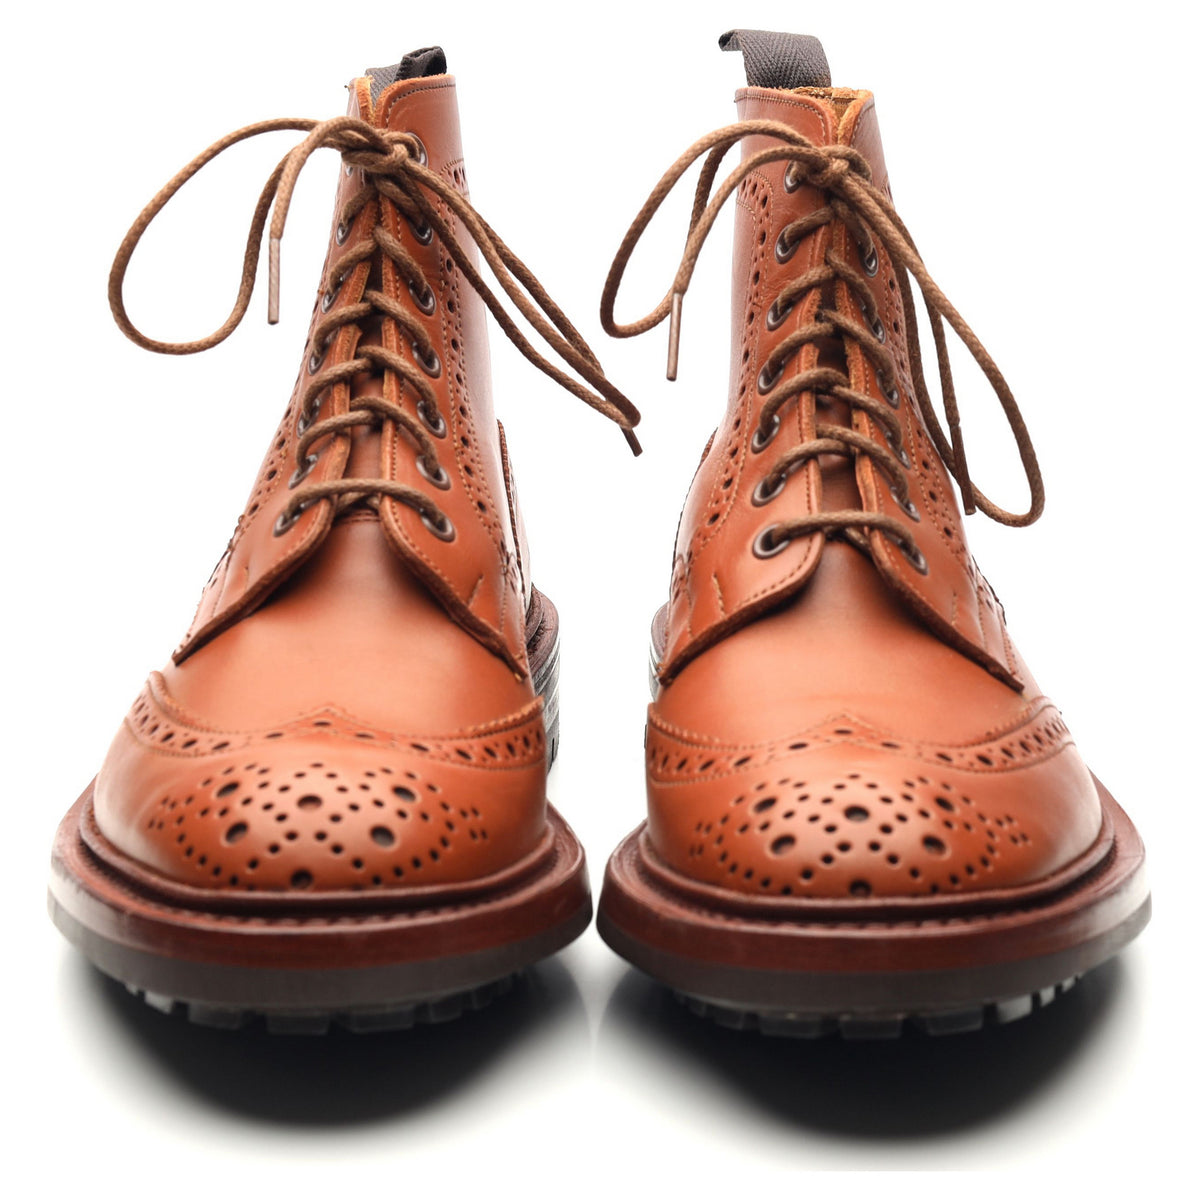 &#39;Malton&#39; Tan Brown Leather Brogue Boots UK 6.5